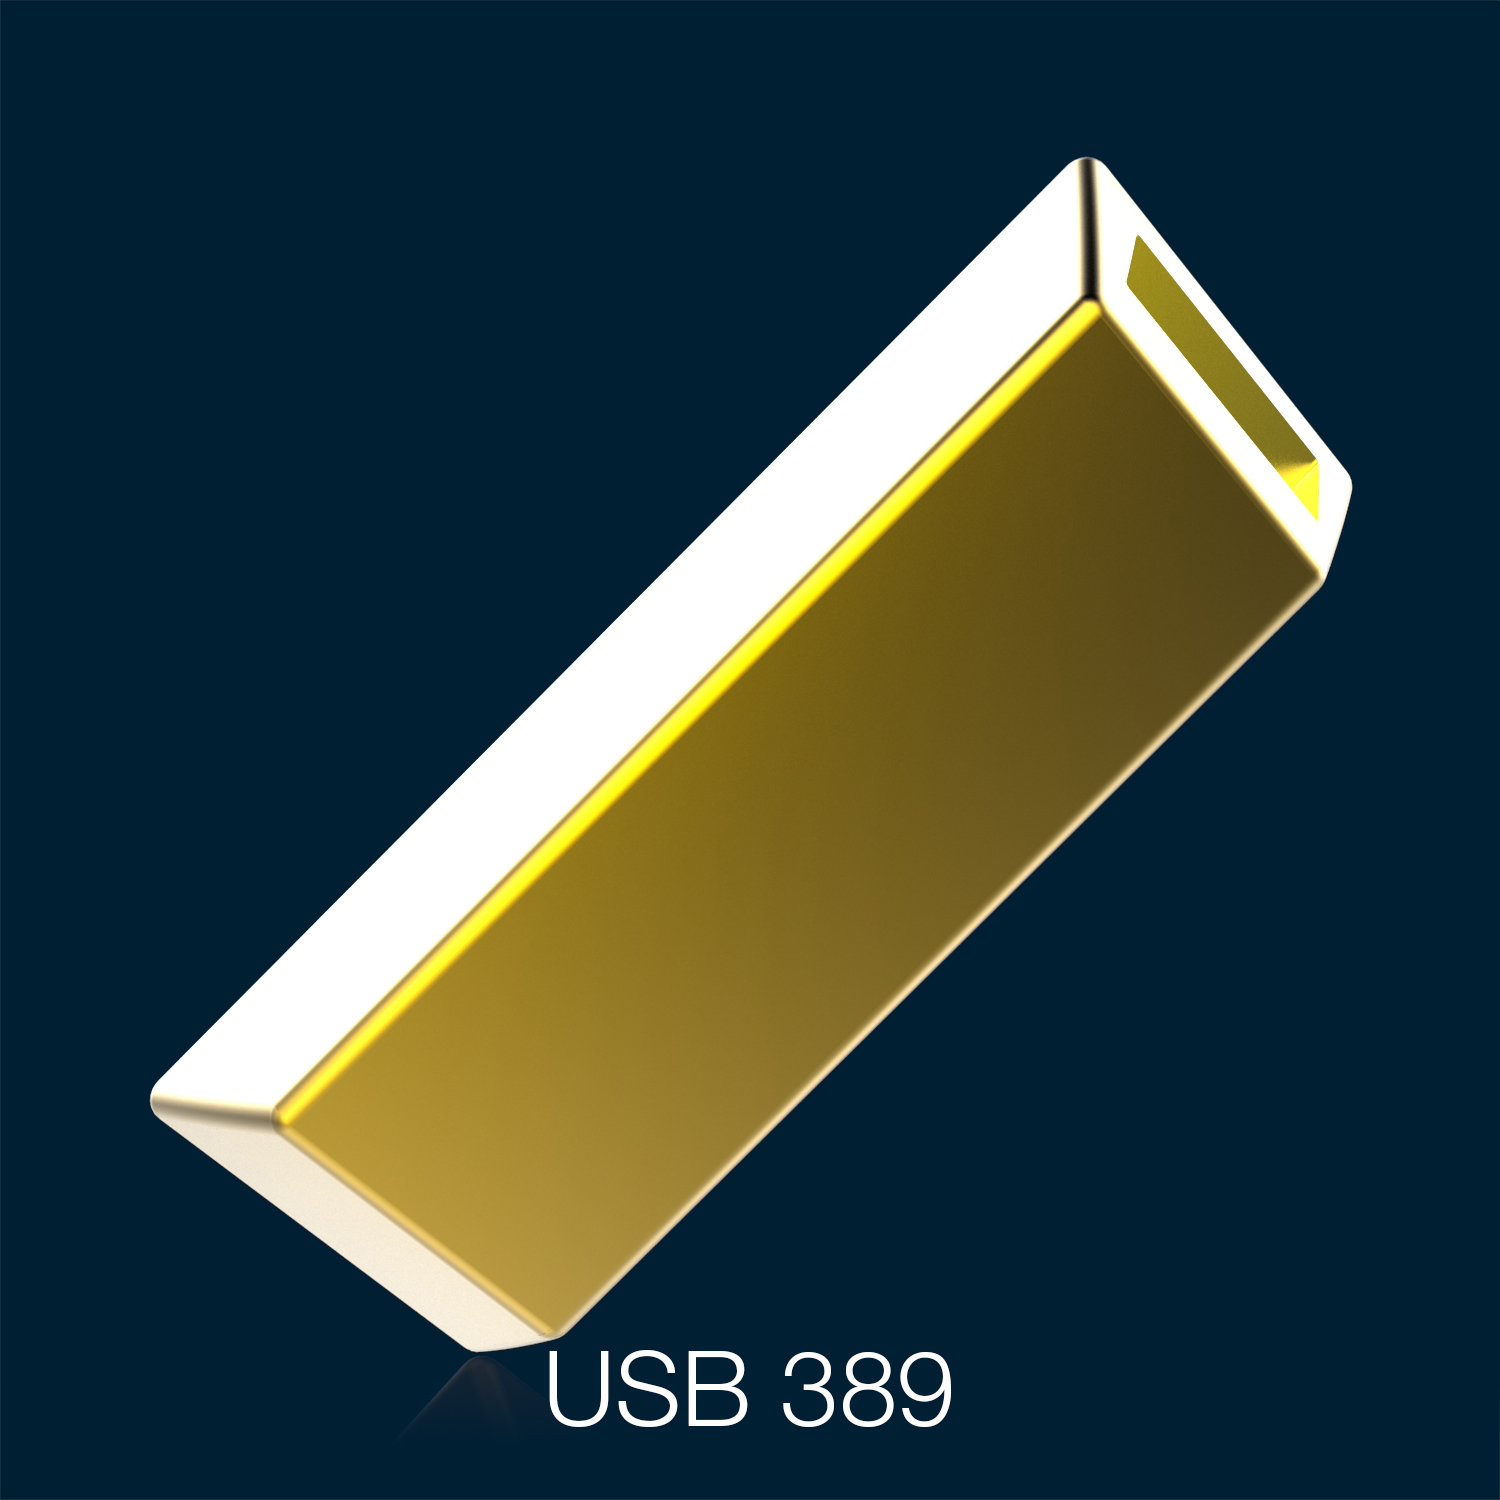 USB 389